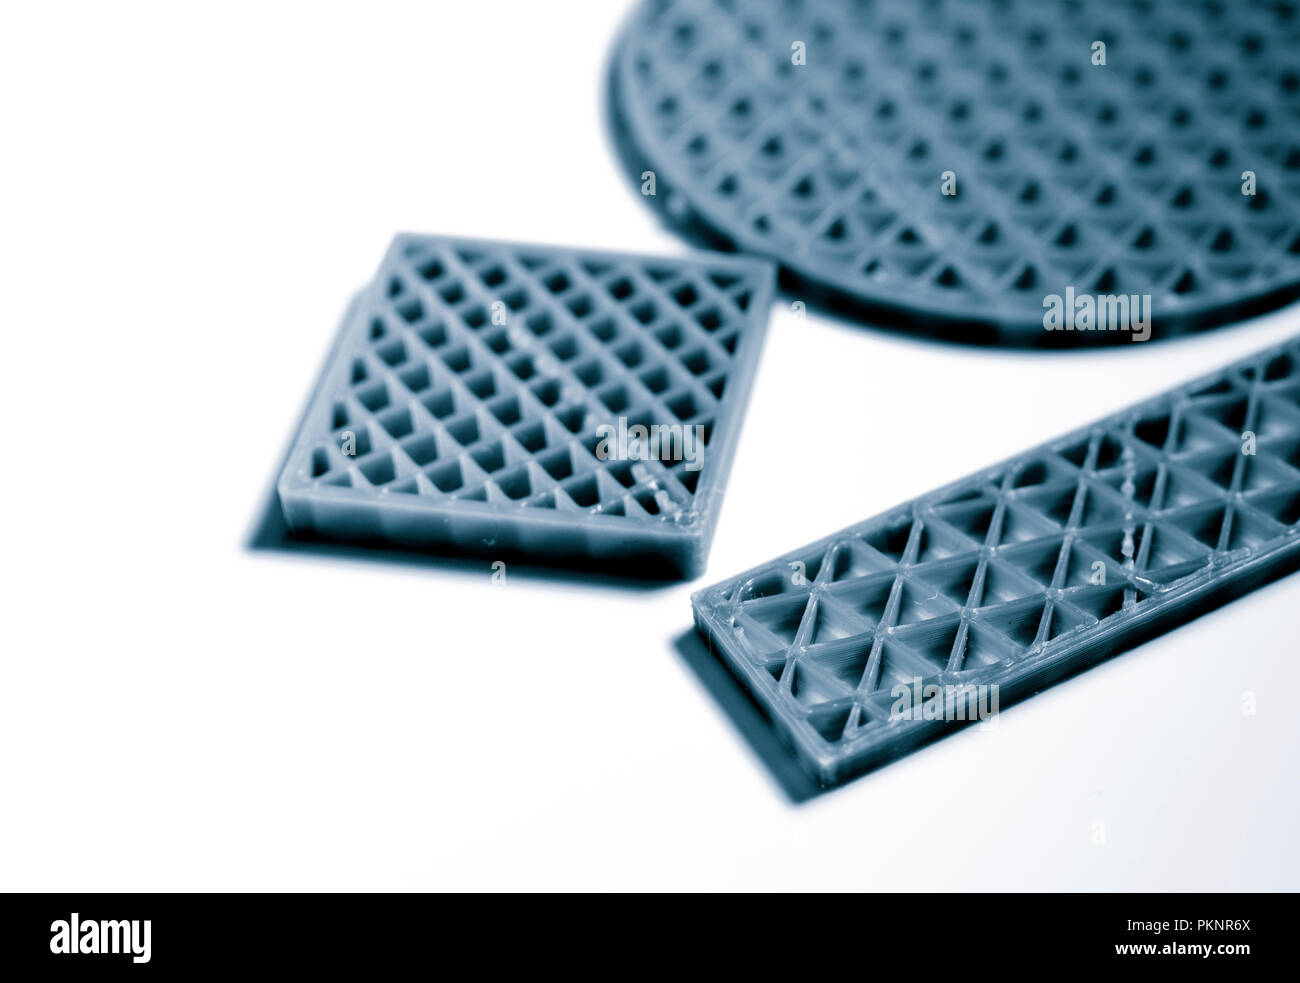 Metamaterial campioni fatti su stampante 3D. Foto Stock